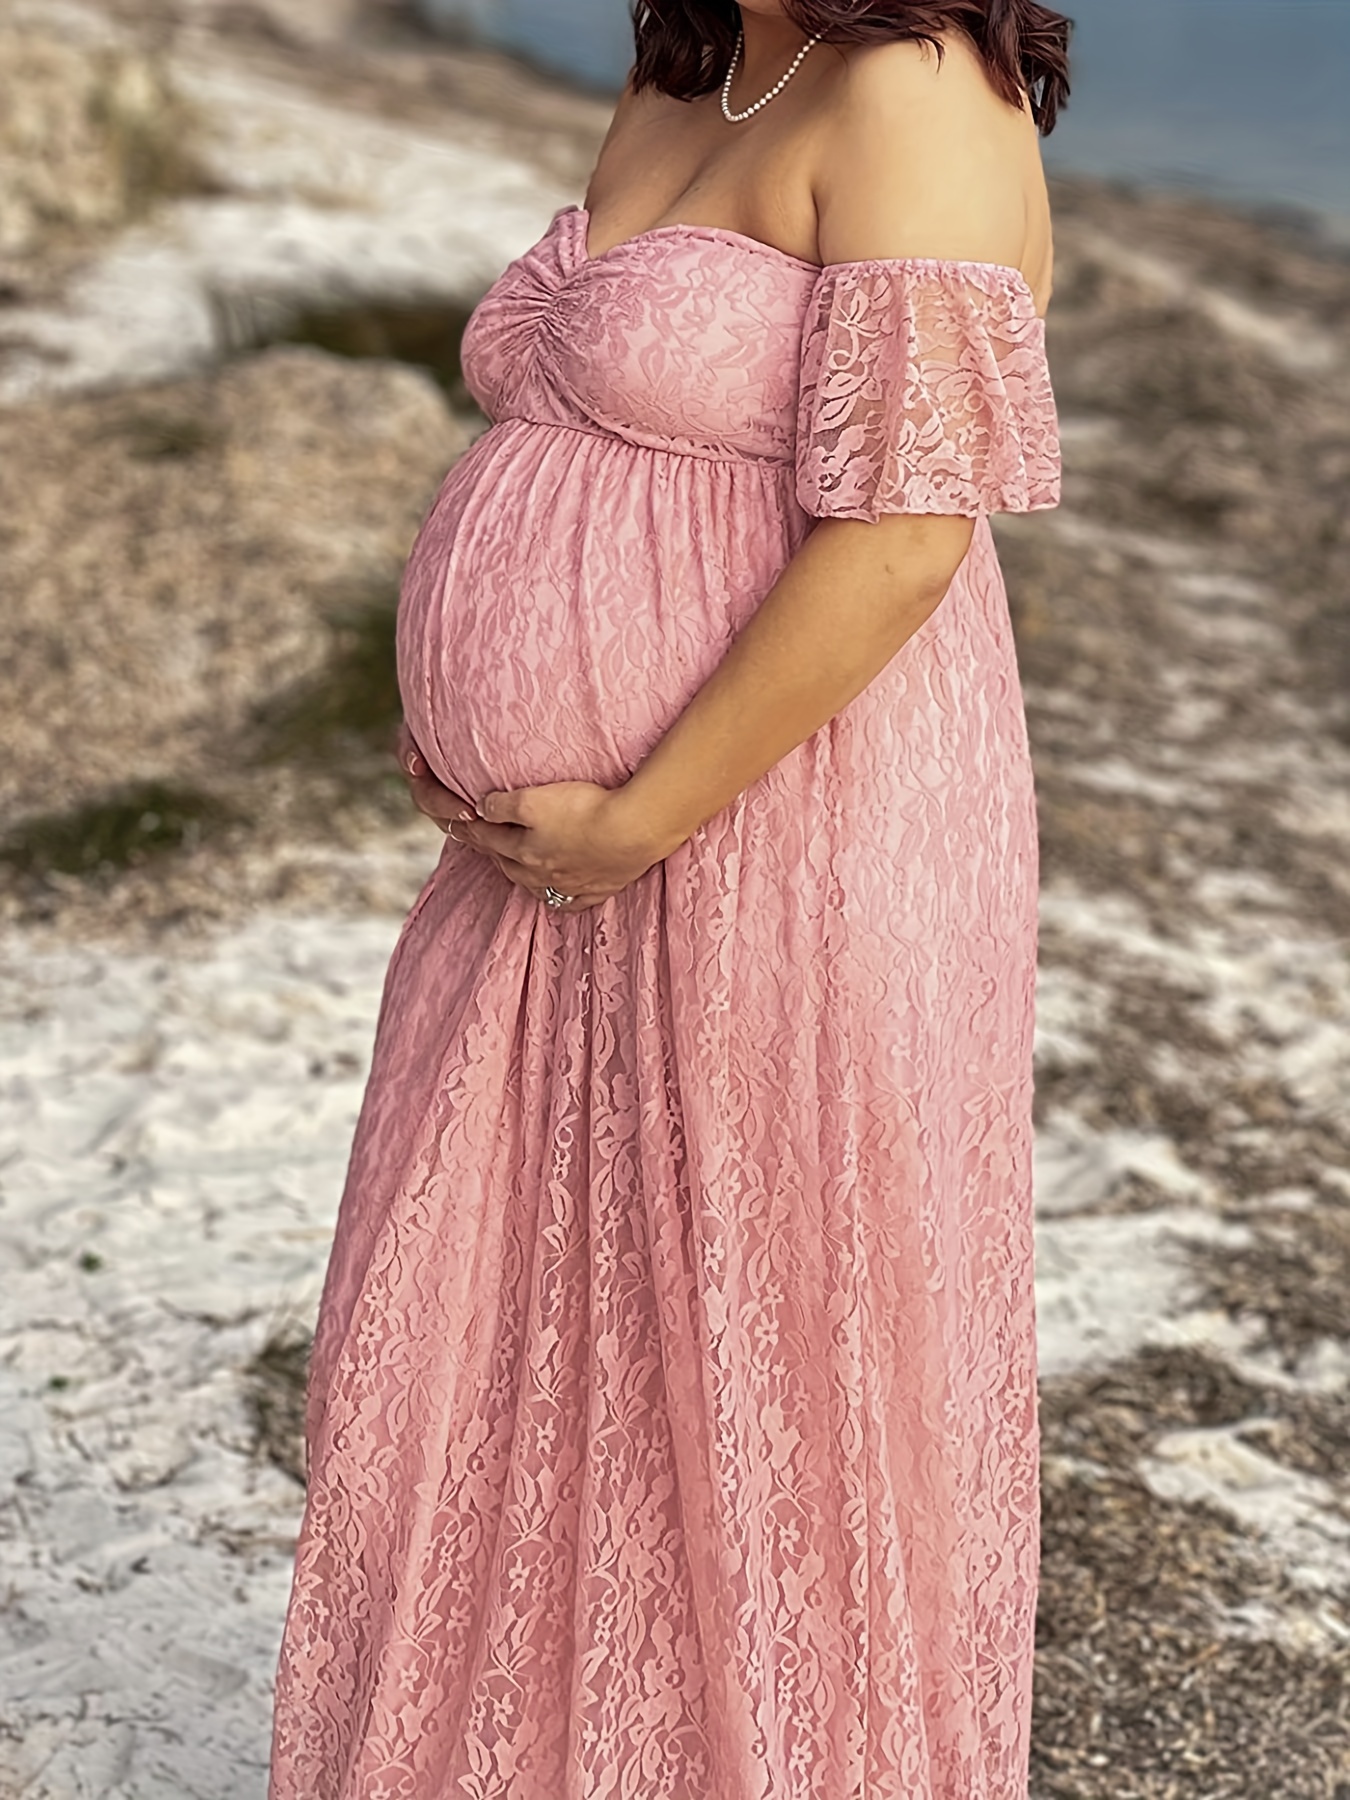 Affordable Maternity Wearelegant Lace Maternity Photography Dress - Summer  Shoulderless Ruffles